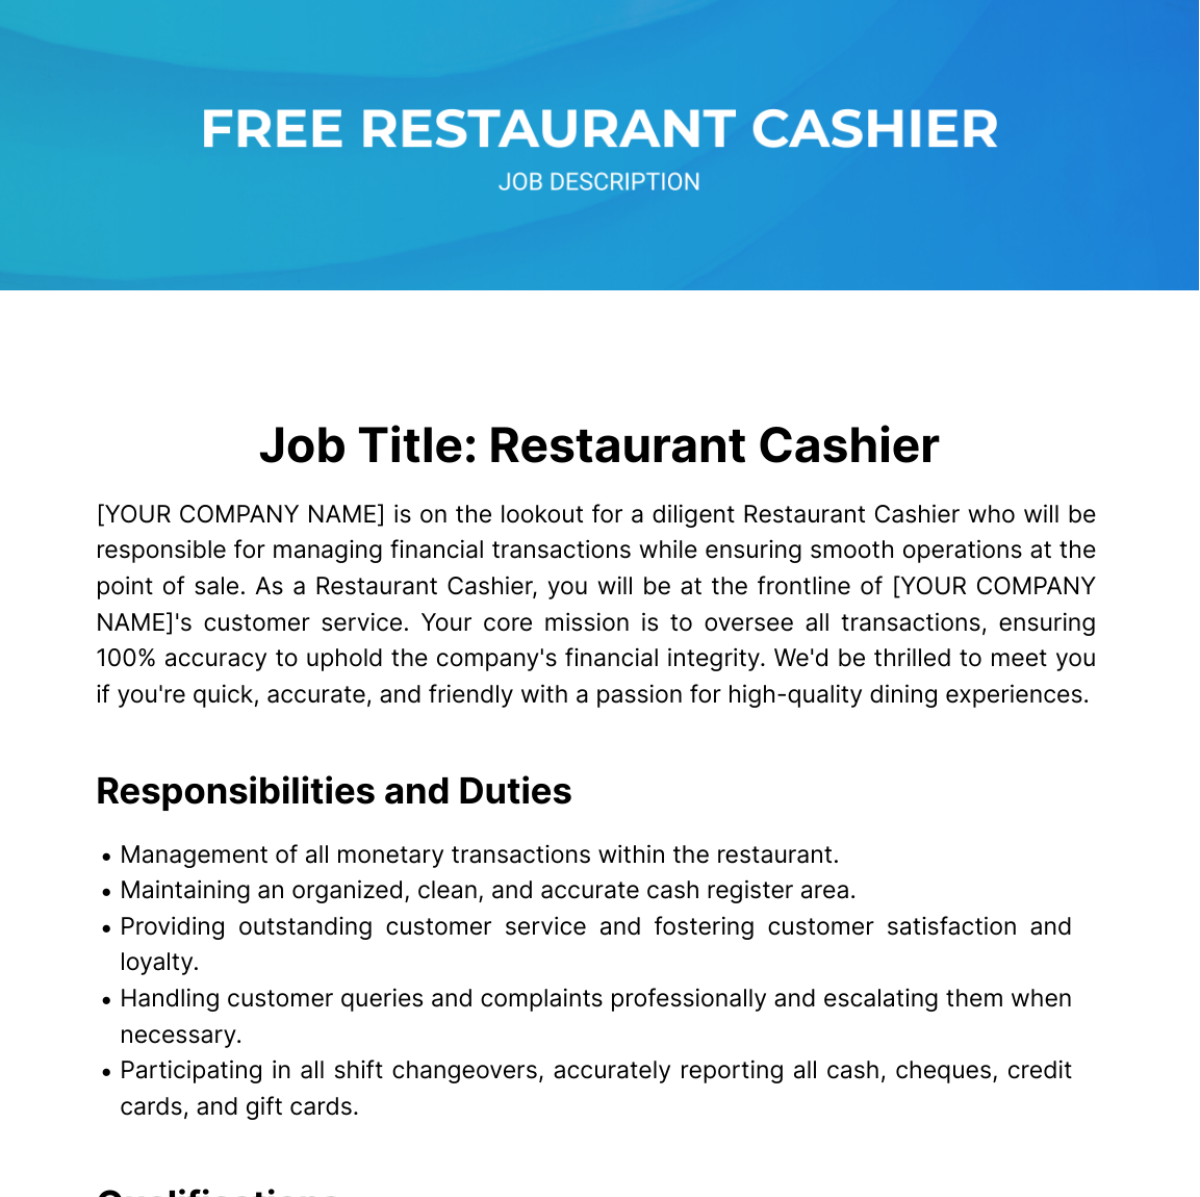 Restaurant Cashier Job Description Template